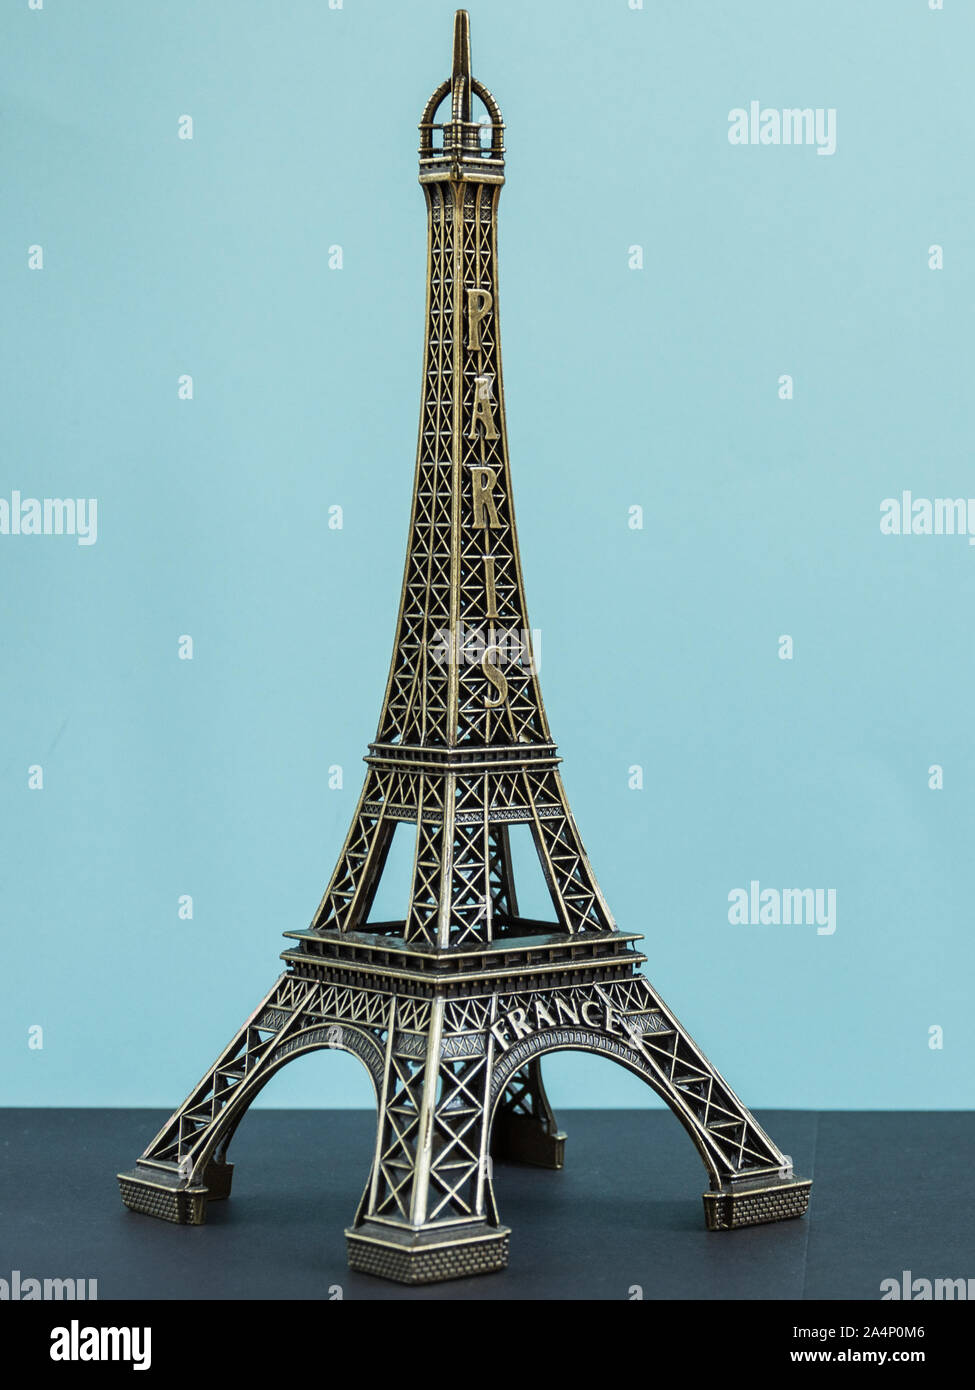 Toy eiffel tower on the blue pastel background. Paris souvenir, symbol of France. Stock Photo